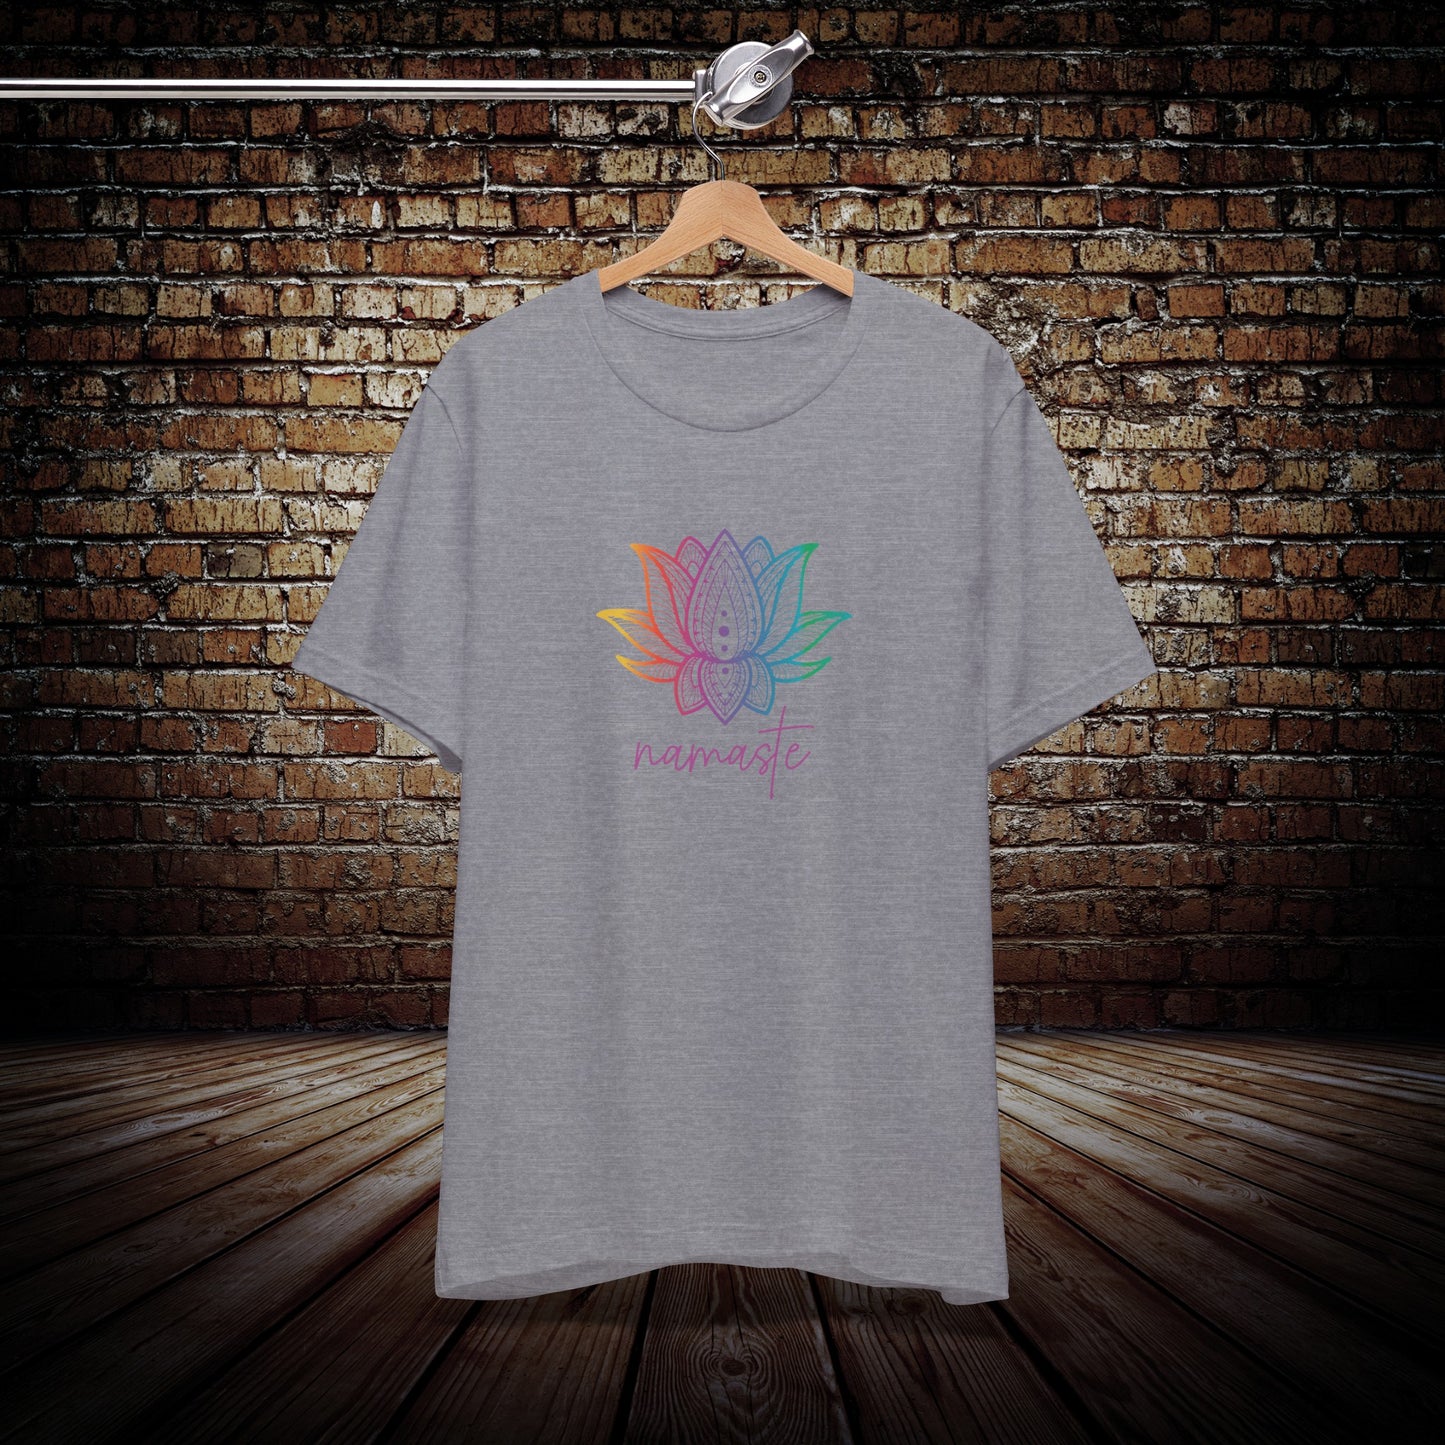 Rainbow Namaste - Yoga Inspired T-Shirt